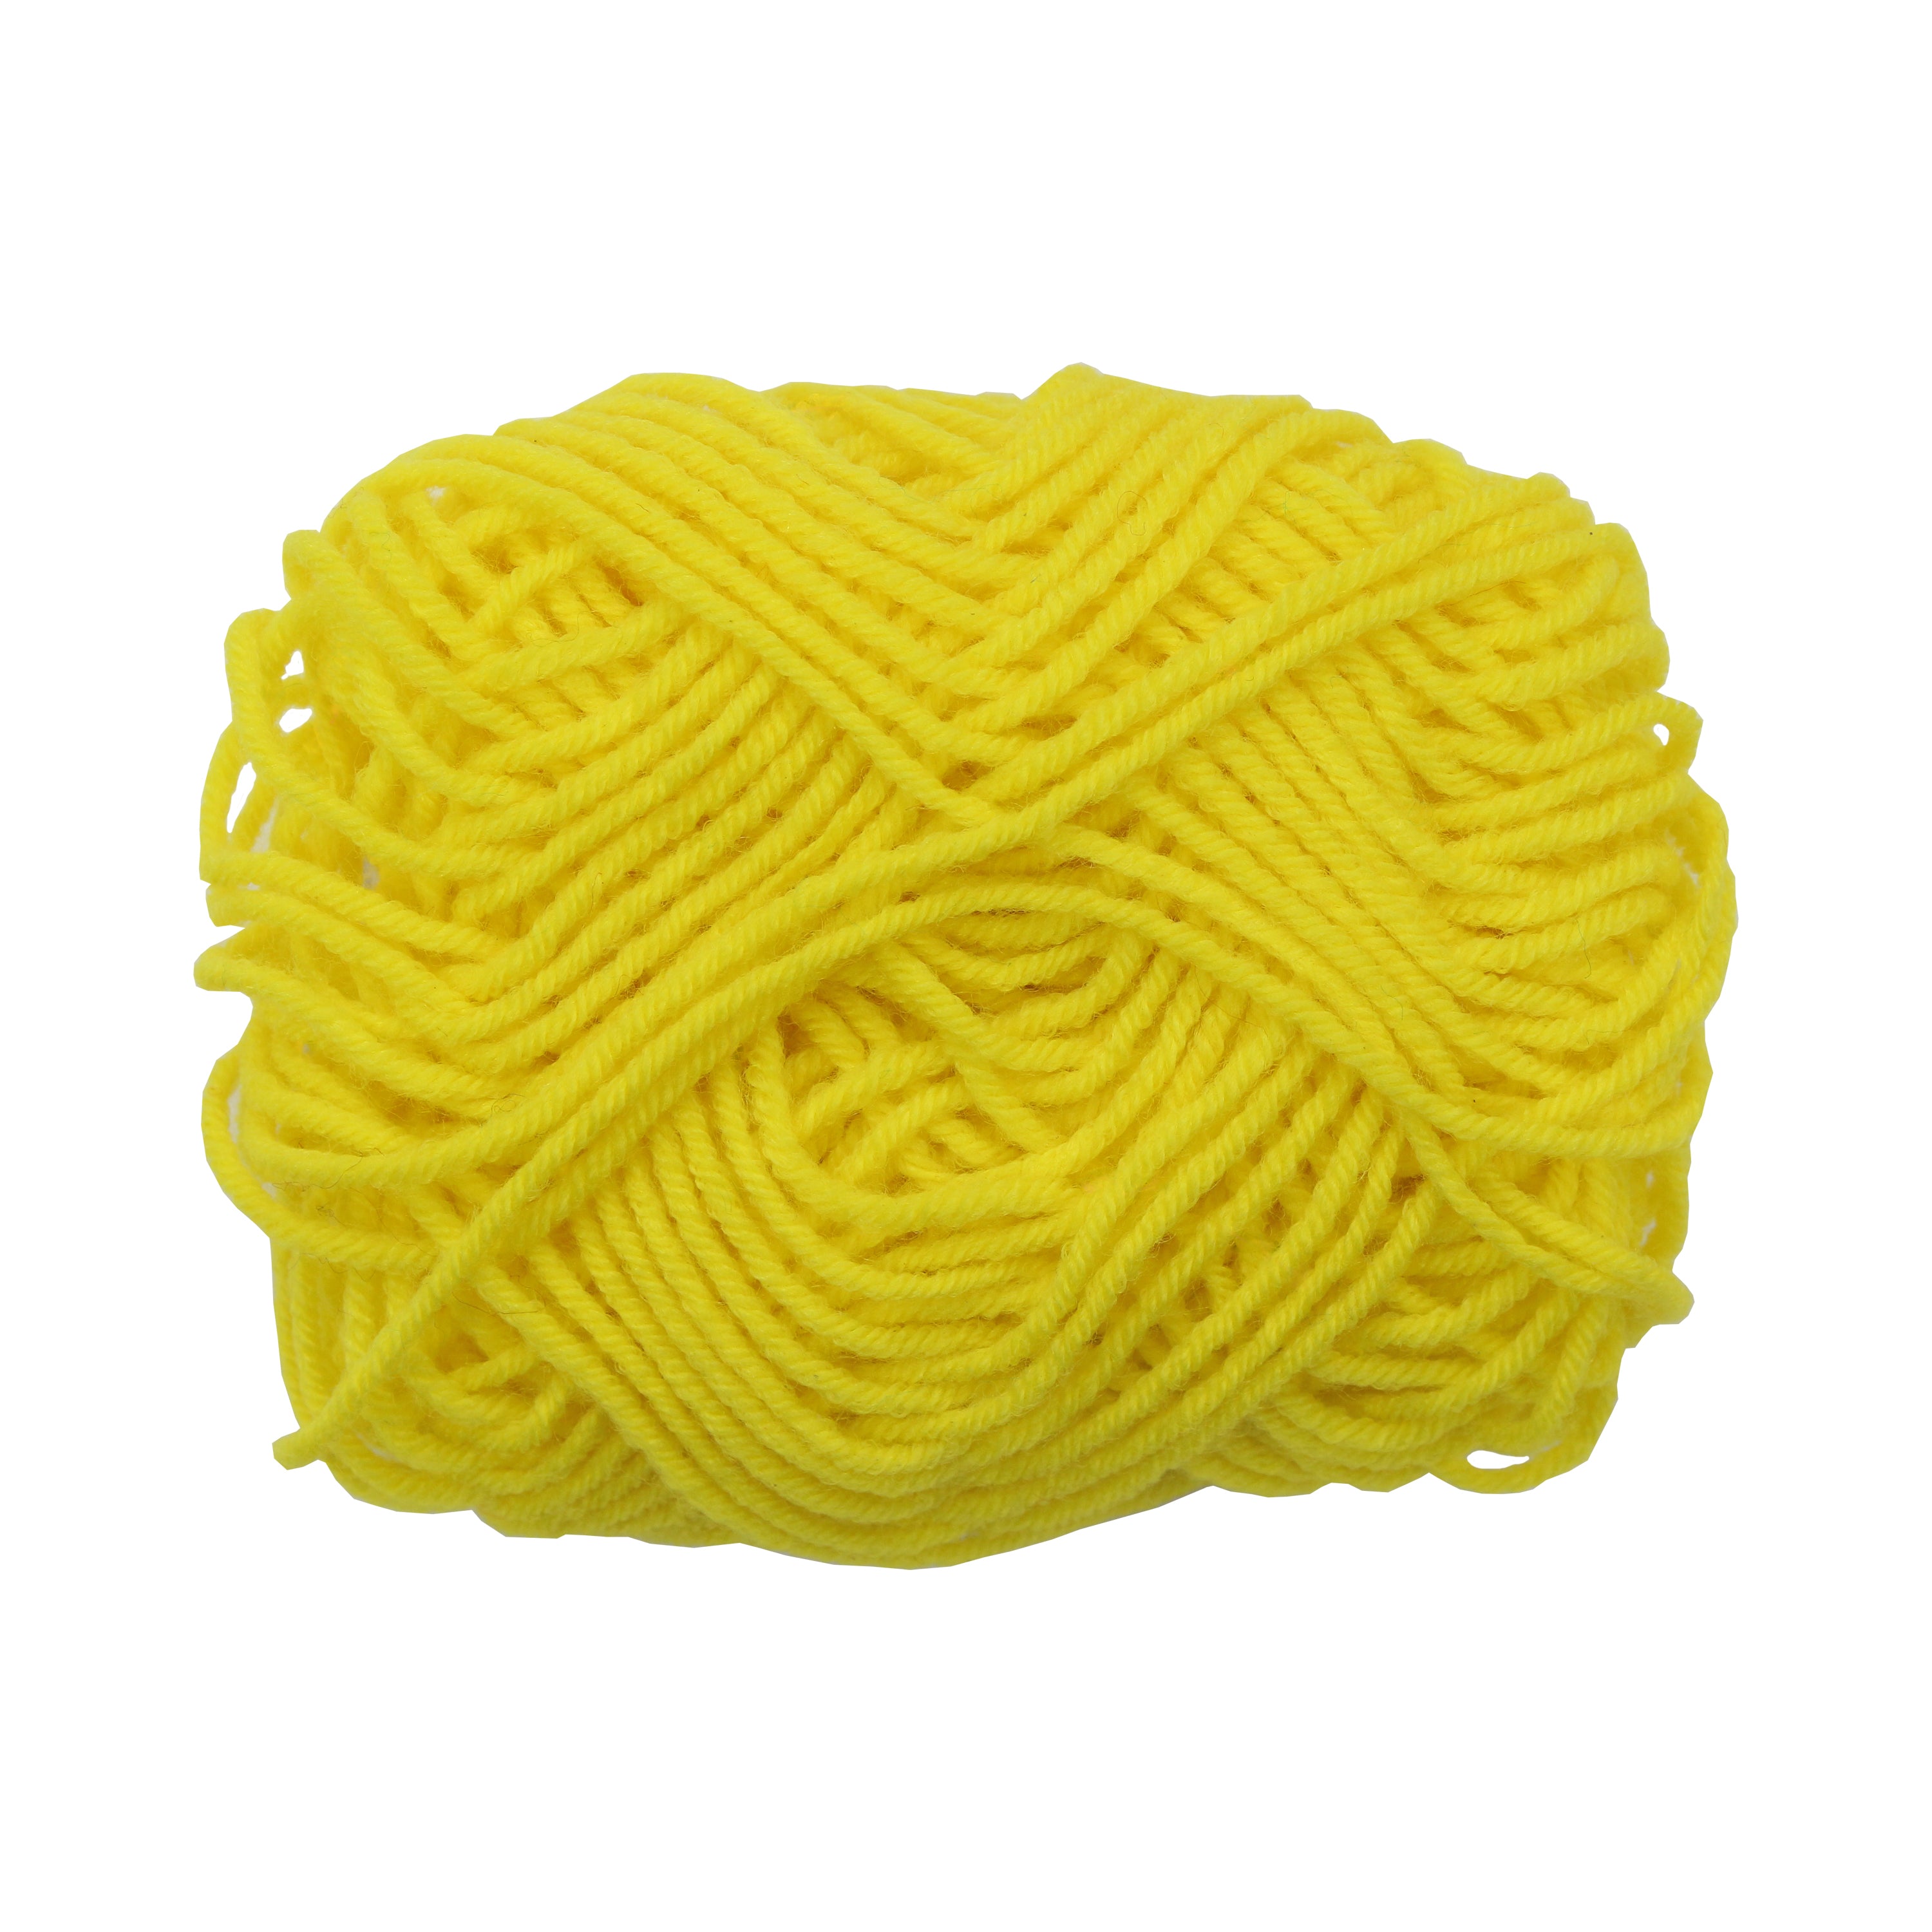 Crochet Hooks For Wool Work 3mm 1pc – Itsy Bitsy